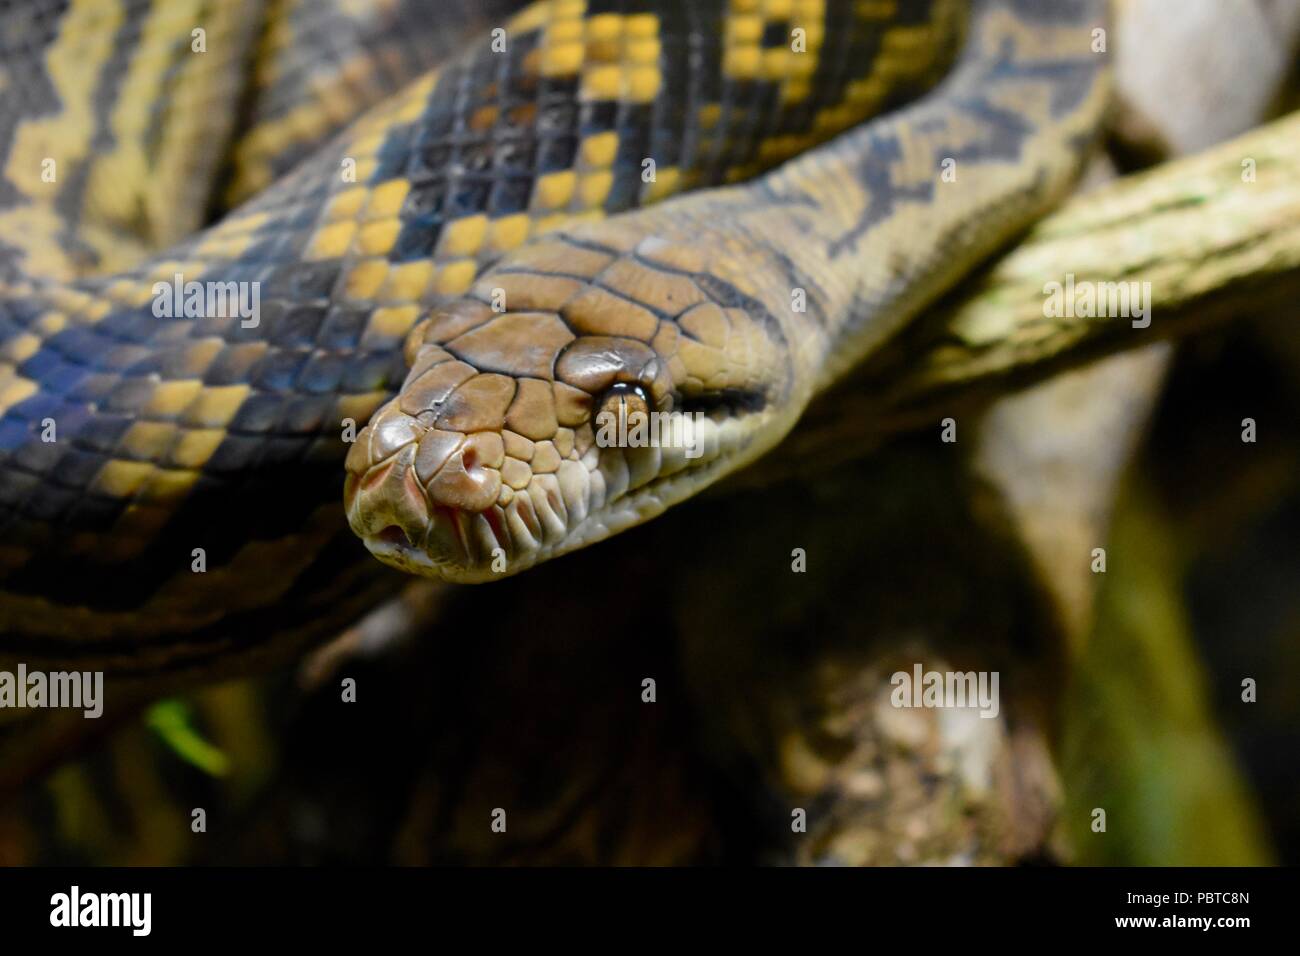 Snake close up Stock Photo